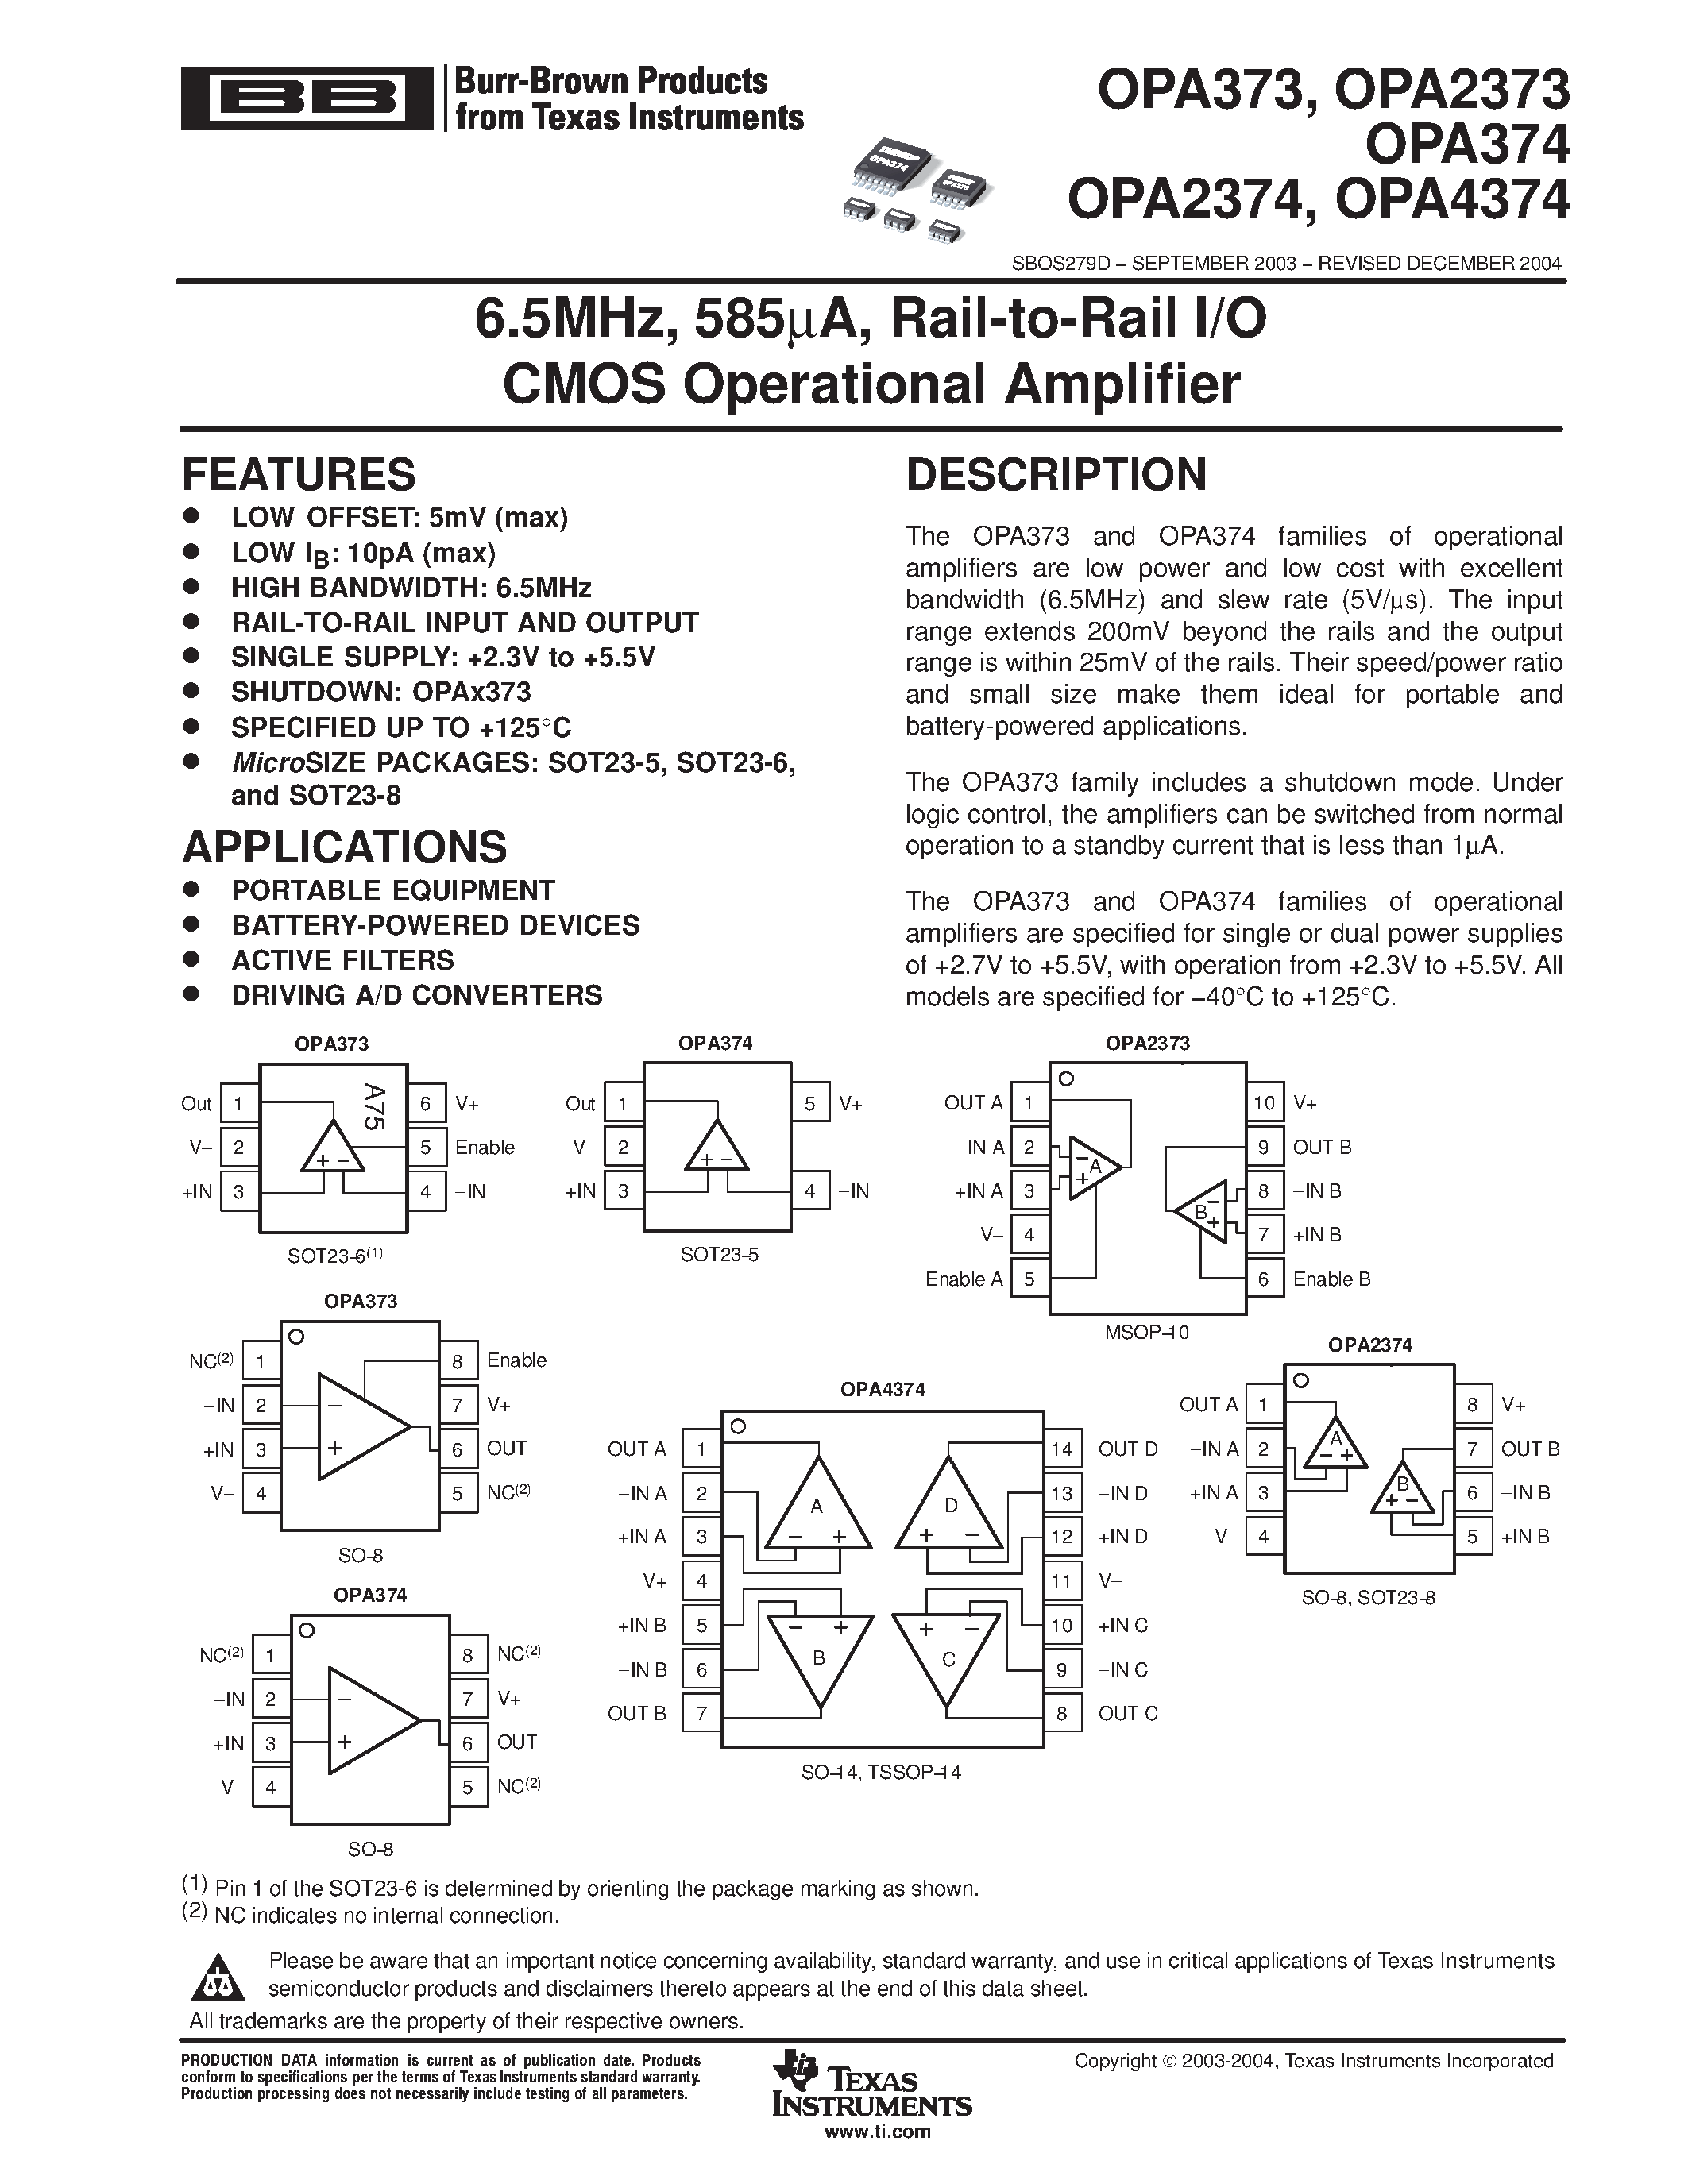 Datasheet OPA373 - 6.5MHz / 585UA / Rail-to-Rail I/O CMOS Operational Amplifier page 1